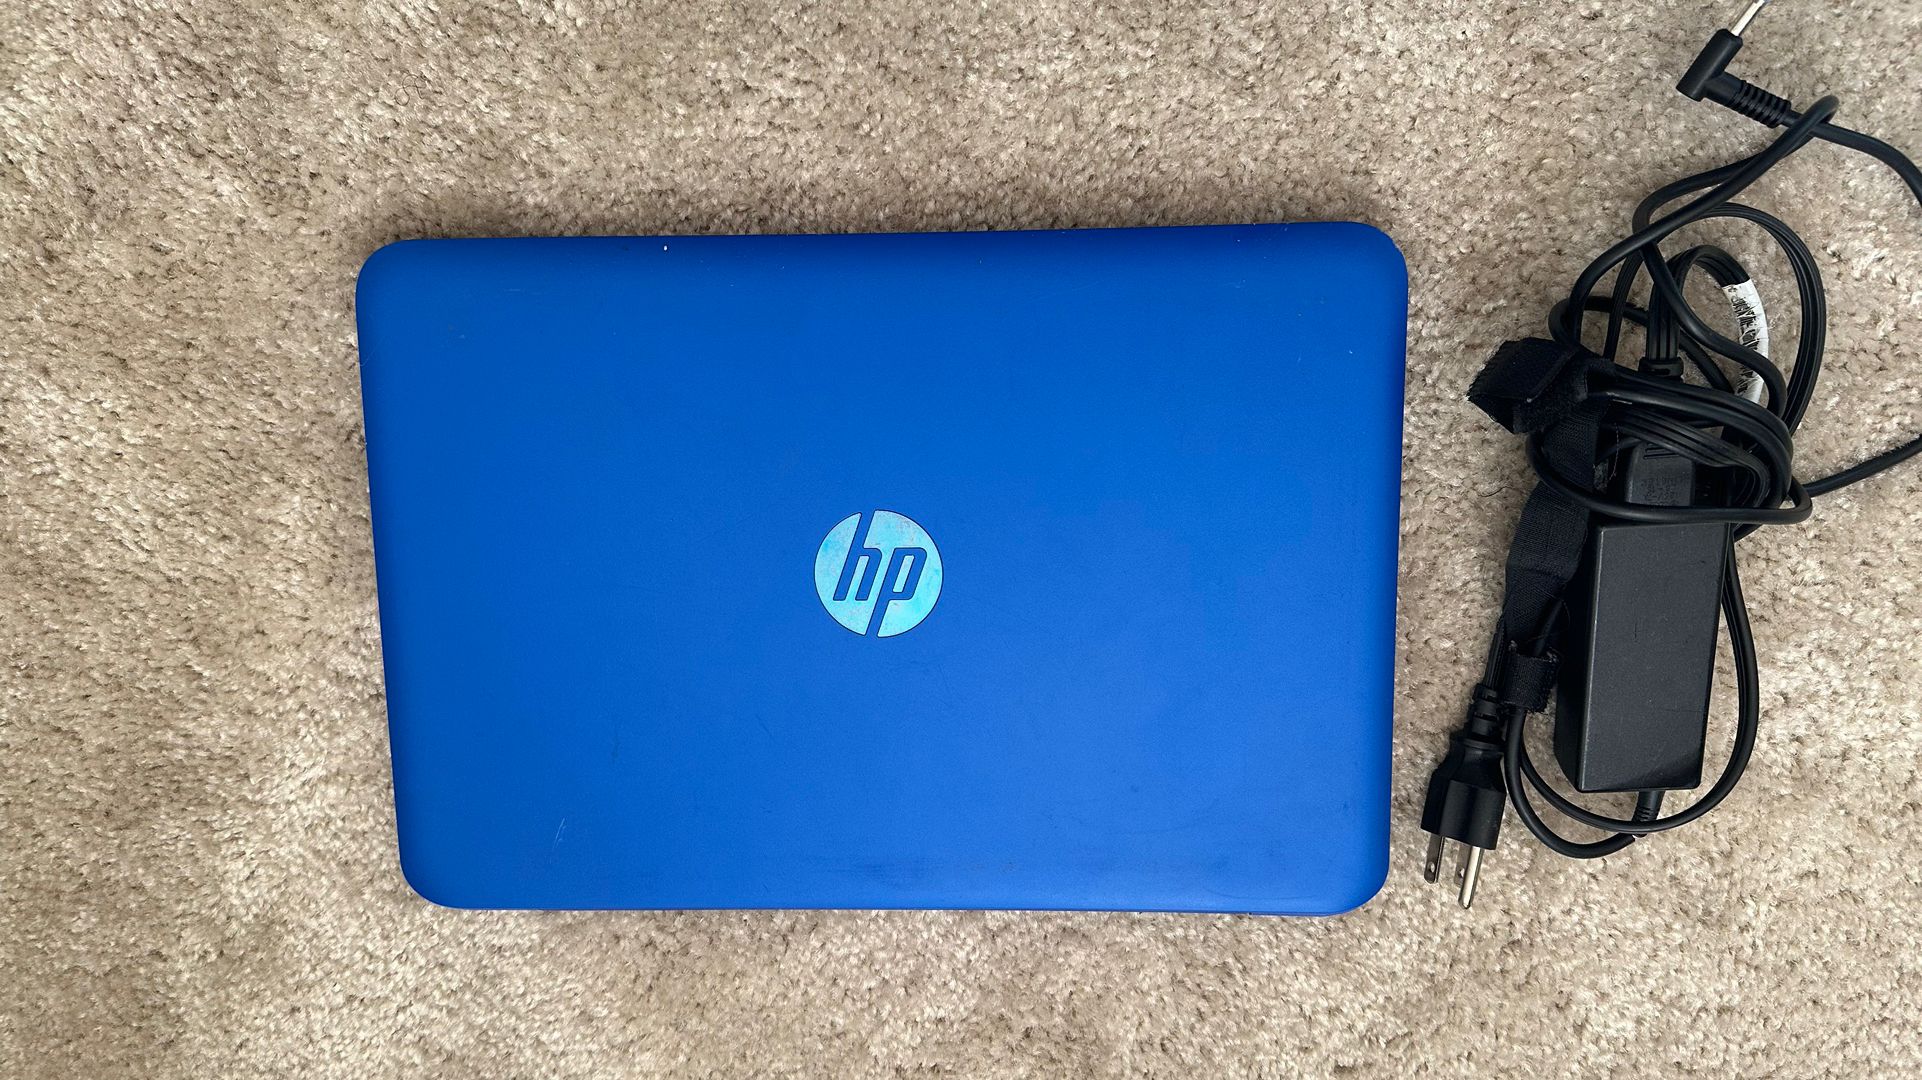 HP Stream laptop